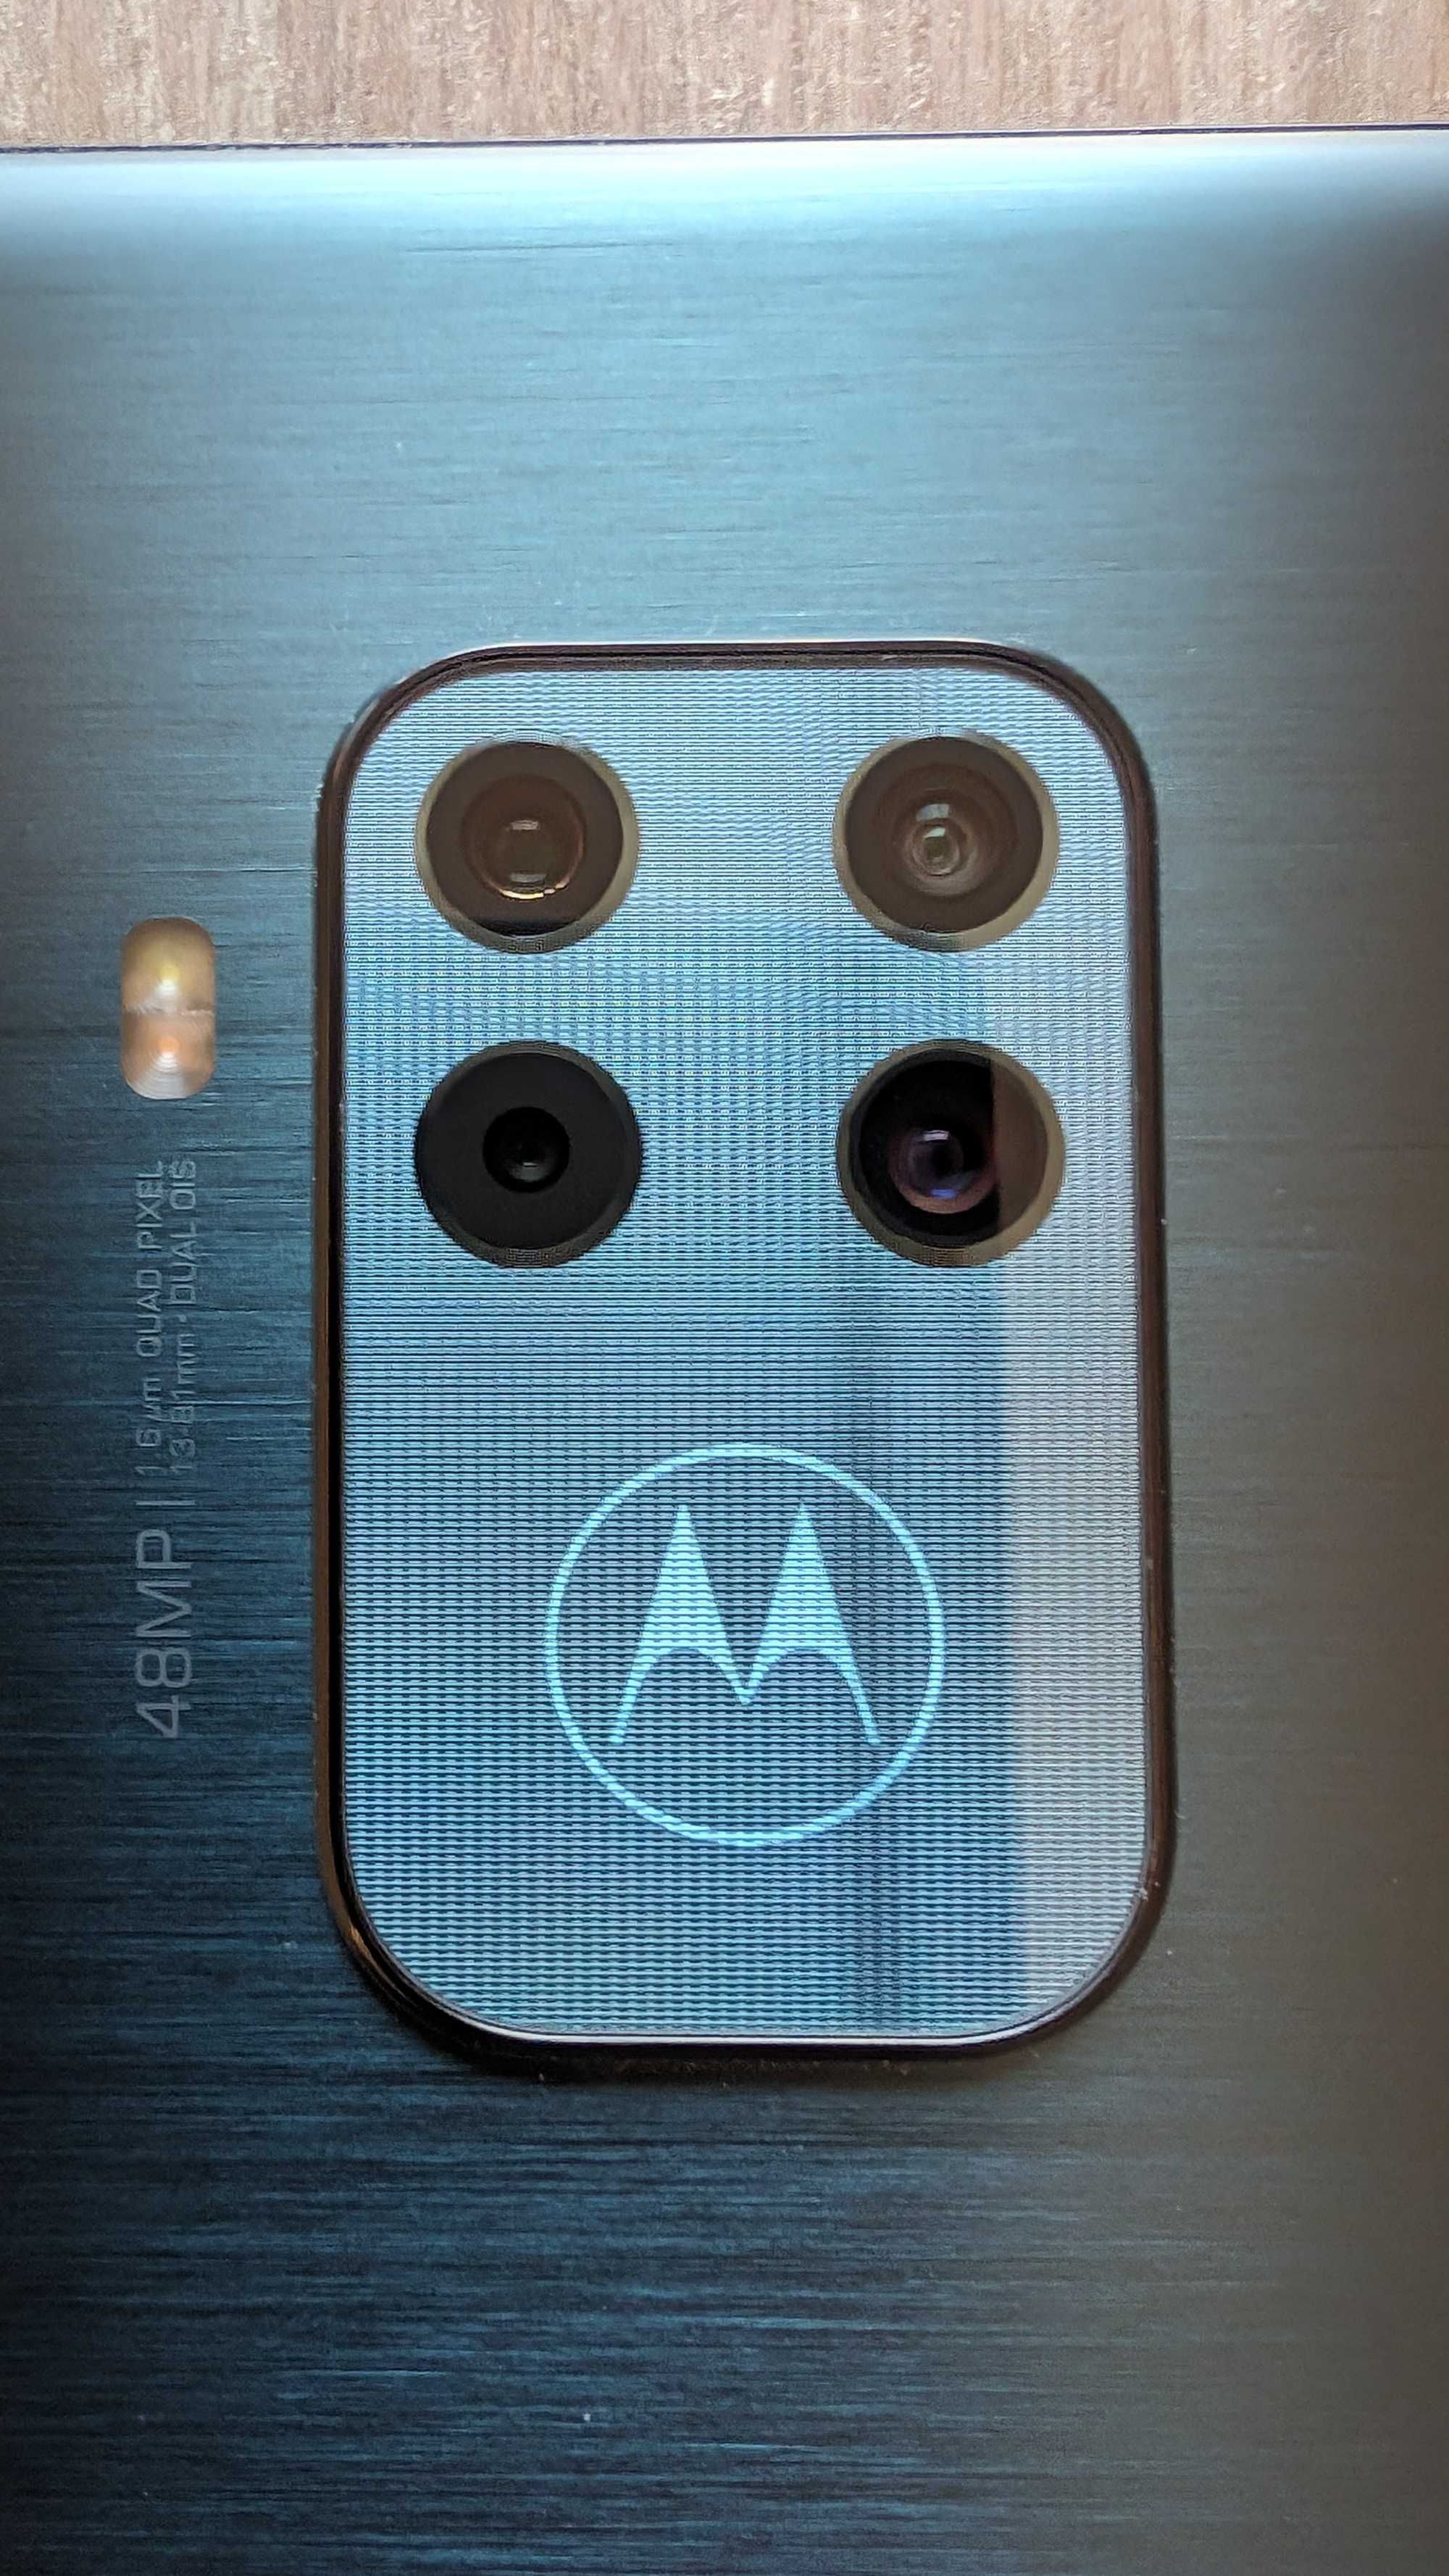 Motorola One Zoom 4/128GB Electric Gray nowy